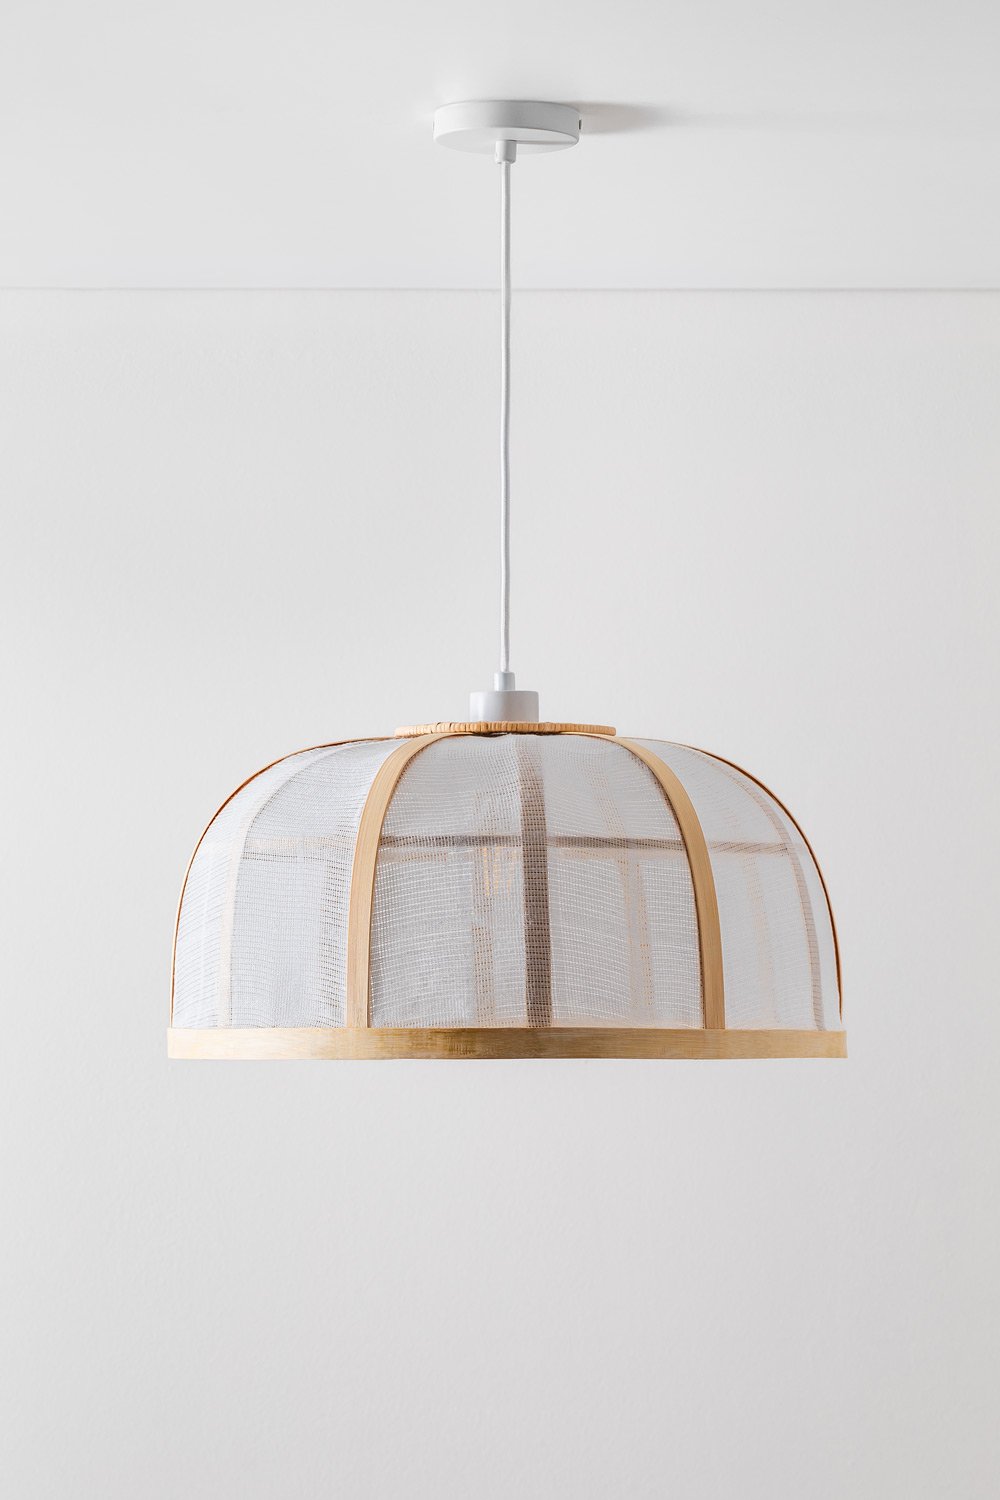 Plafondlamp van bamboe en katoen (Ø45 cm) Mikayla, galerij beeld 1